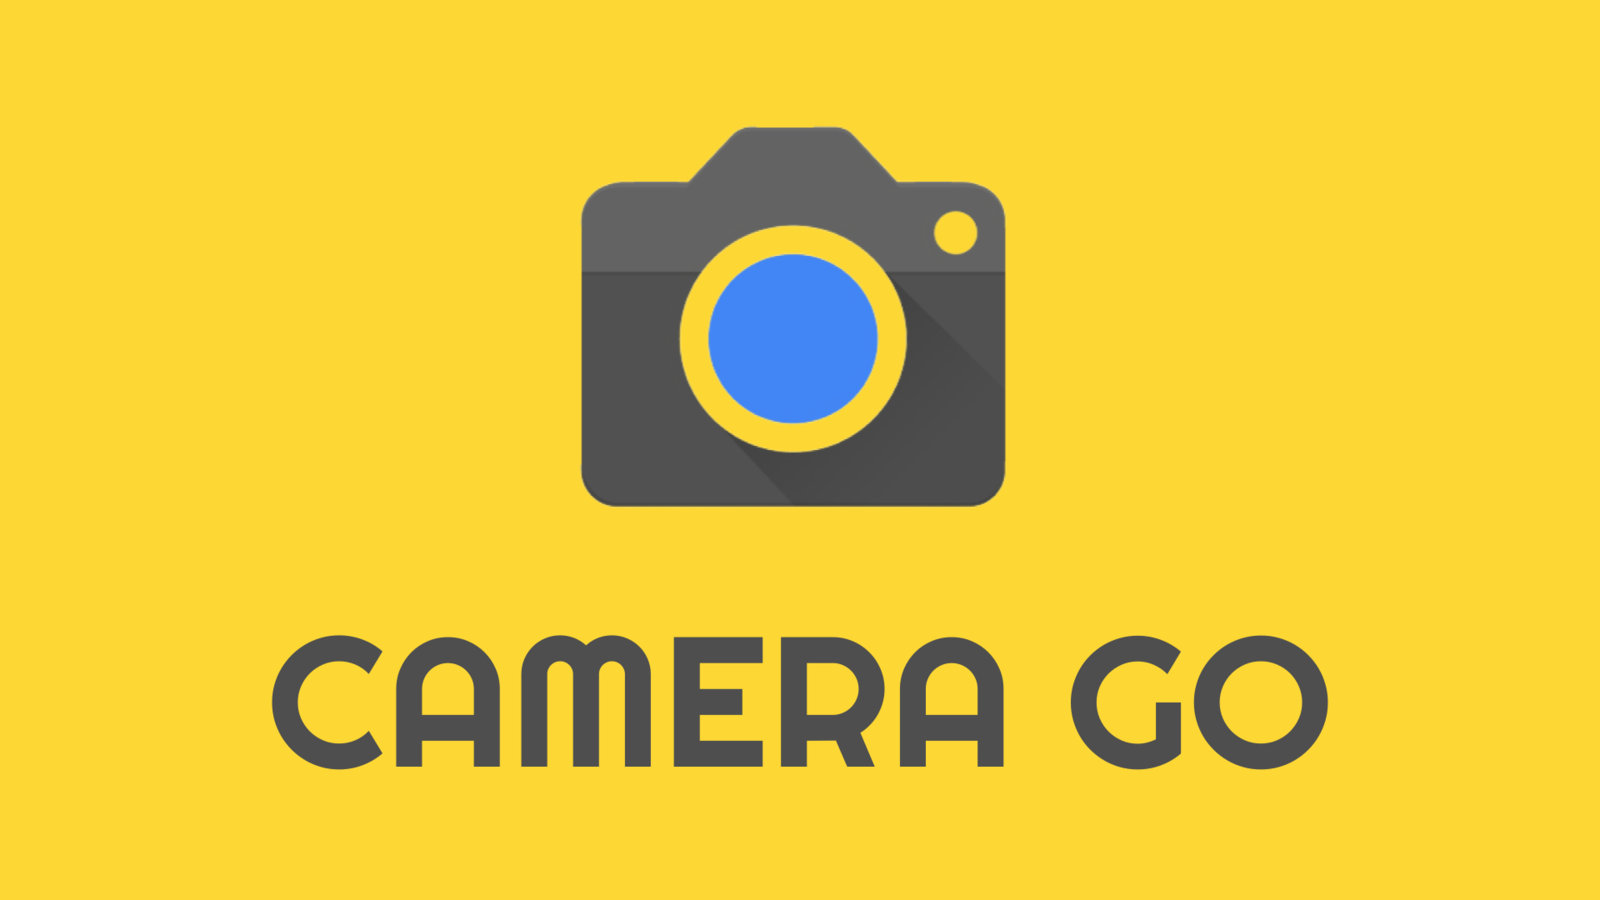 Google Camera Go 3.3 APK Download